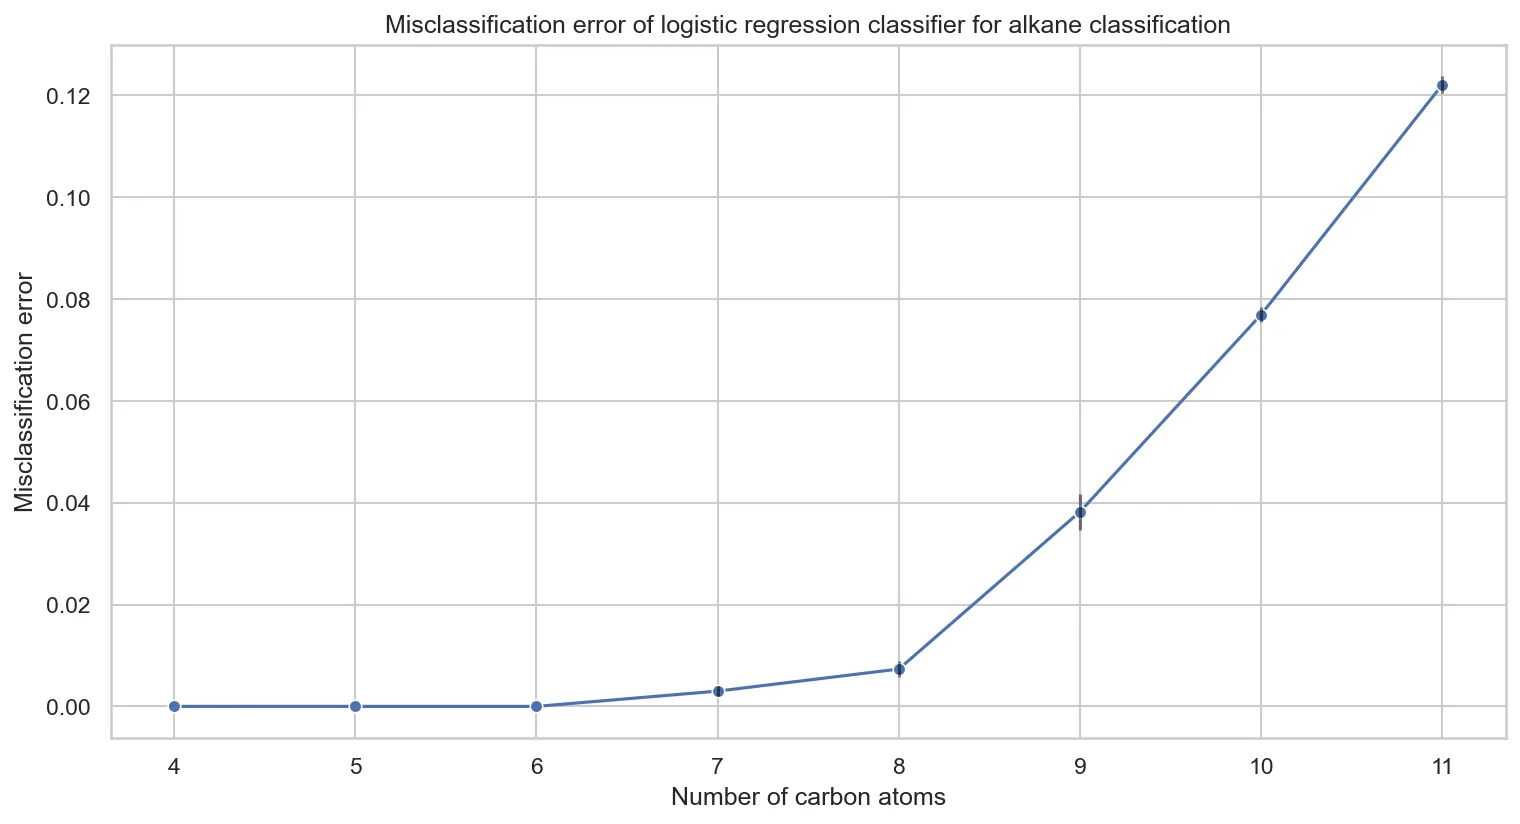 Misclassification error of Logistic Regression classifier for alkane classification